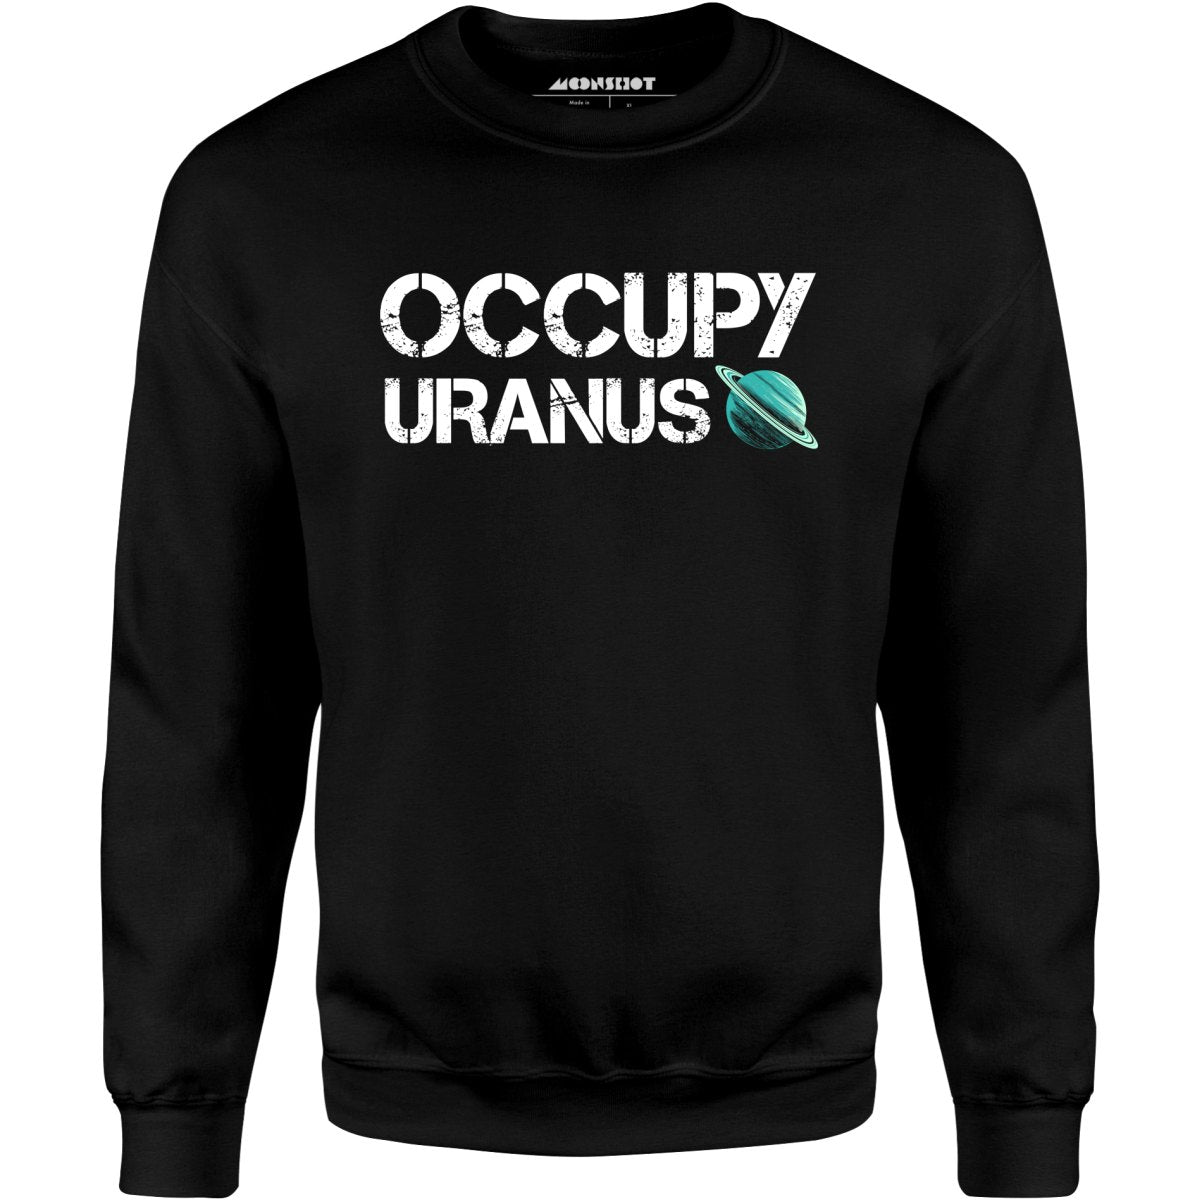 Occupy Uranus - Unisex Sweatshirt